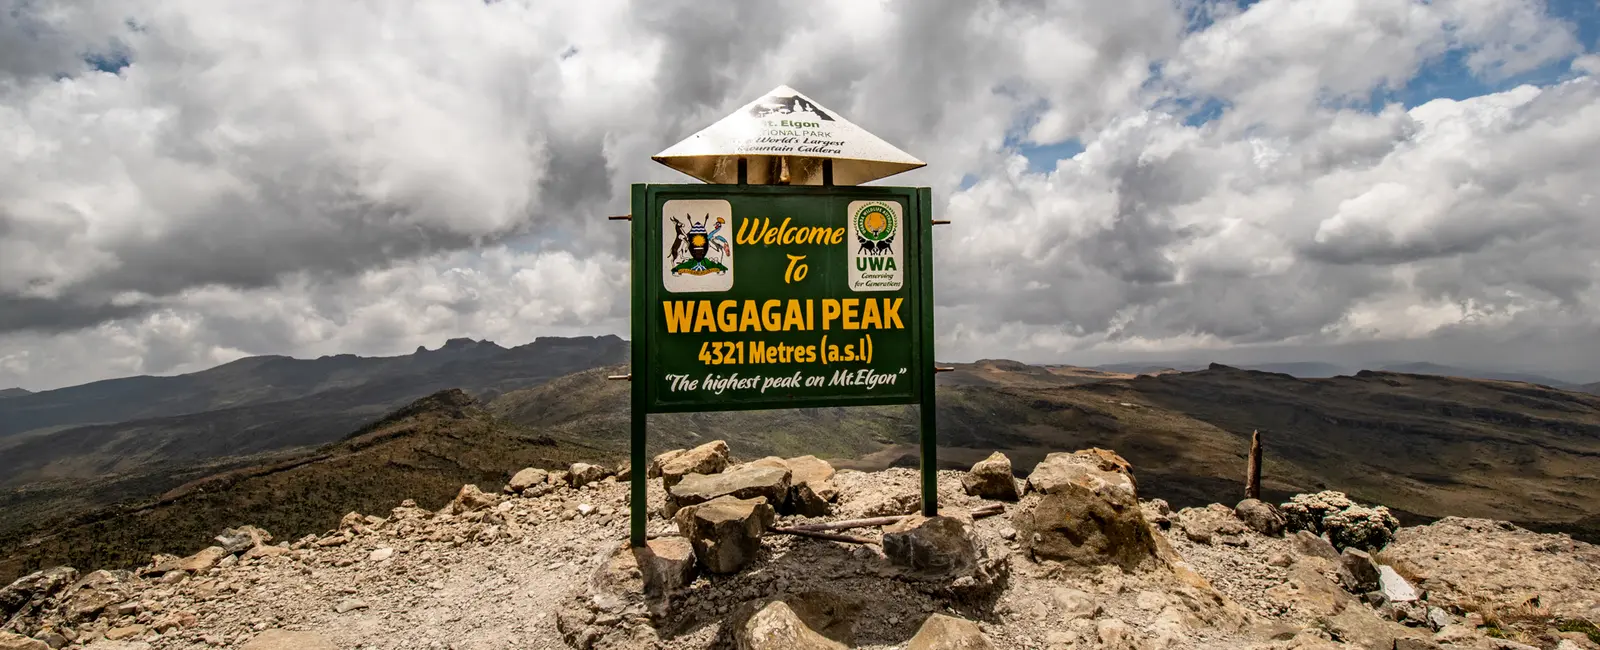 Wagagai Peak Mount Elgon